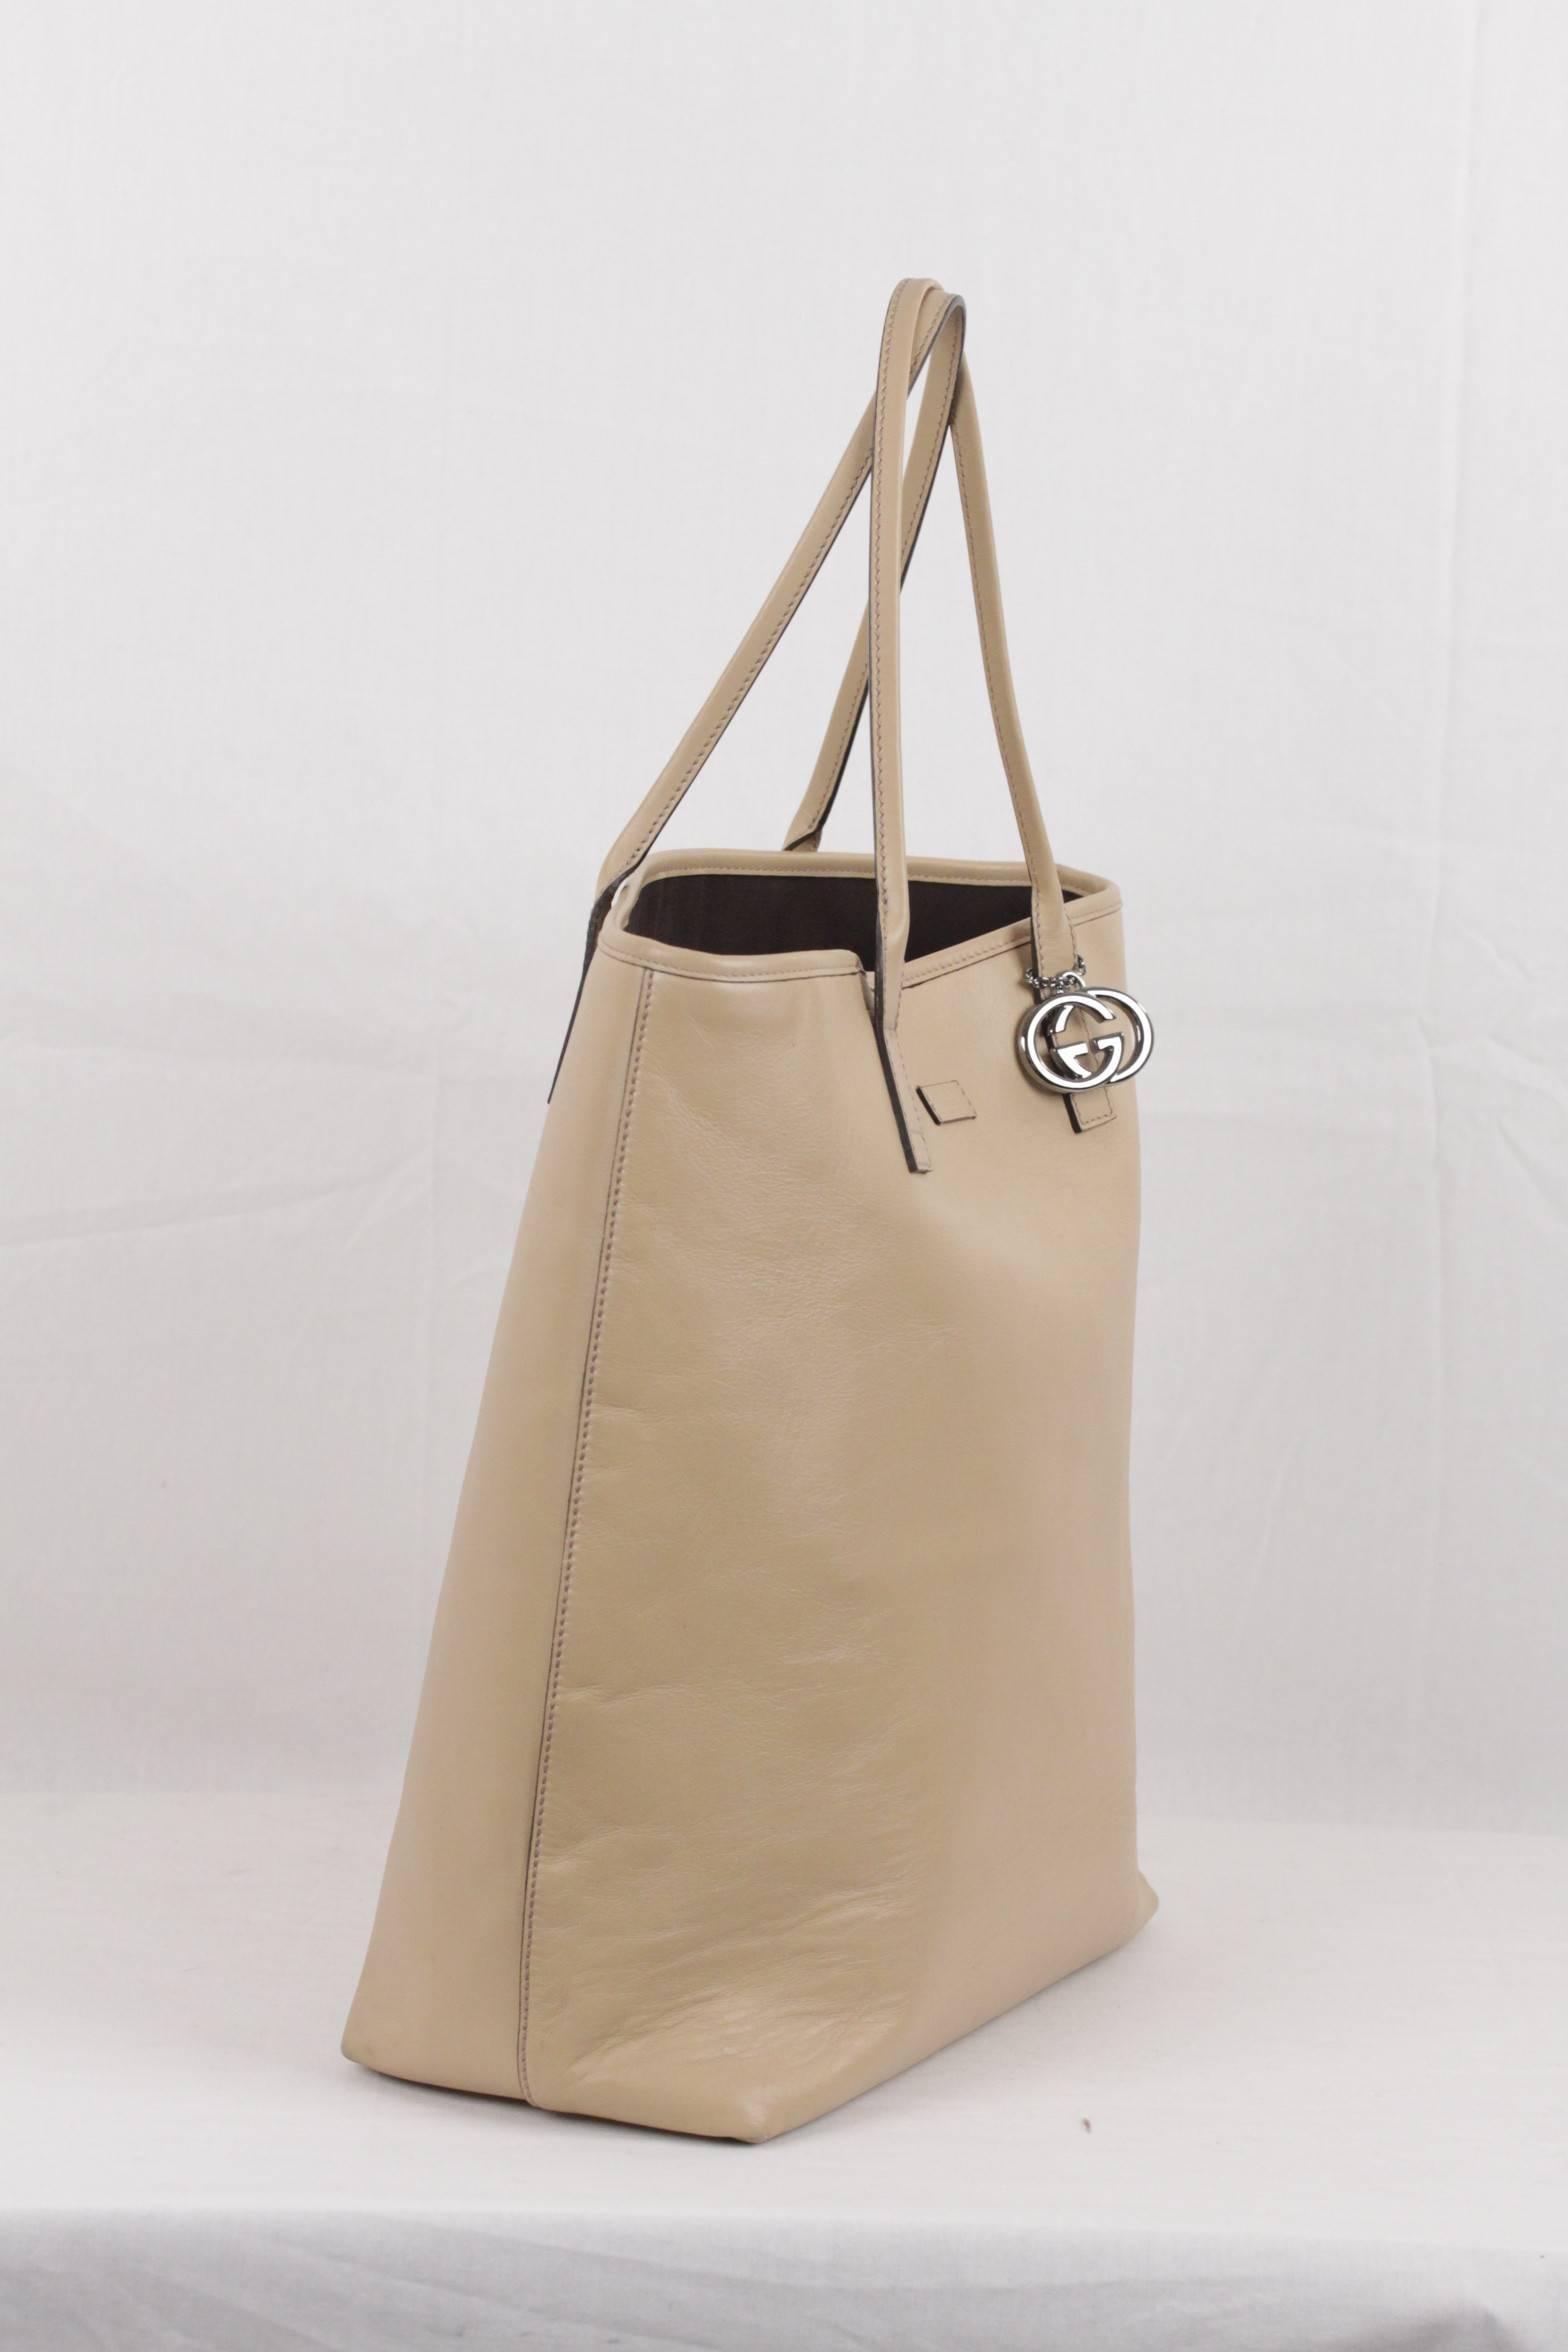 GUCCI Beige Leather SHOPPING BAG Tote Handbag 1